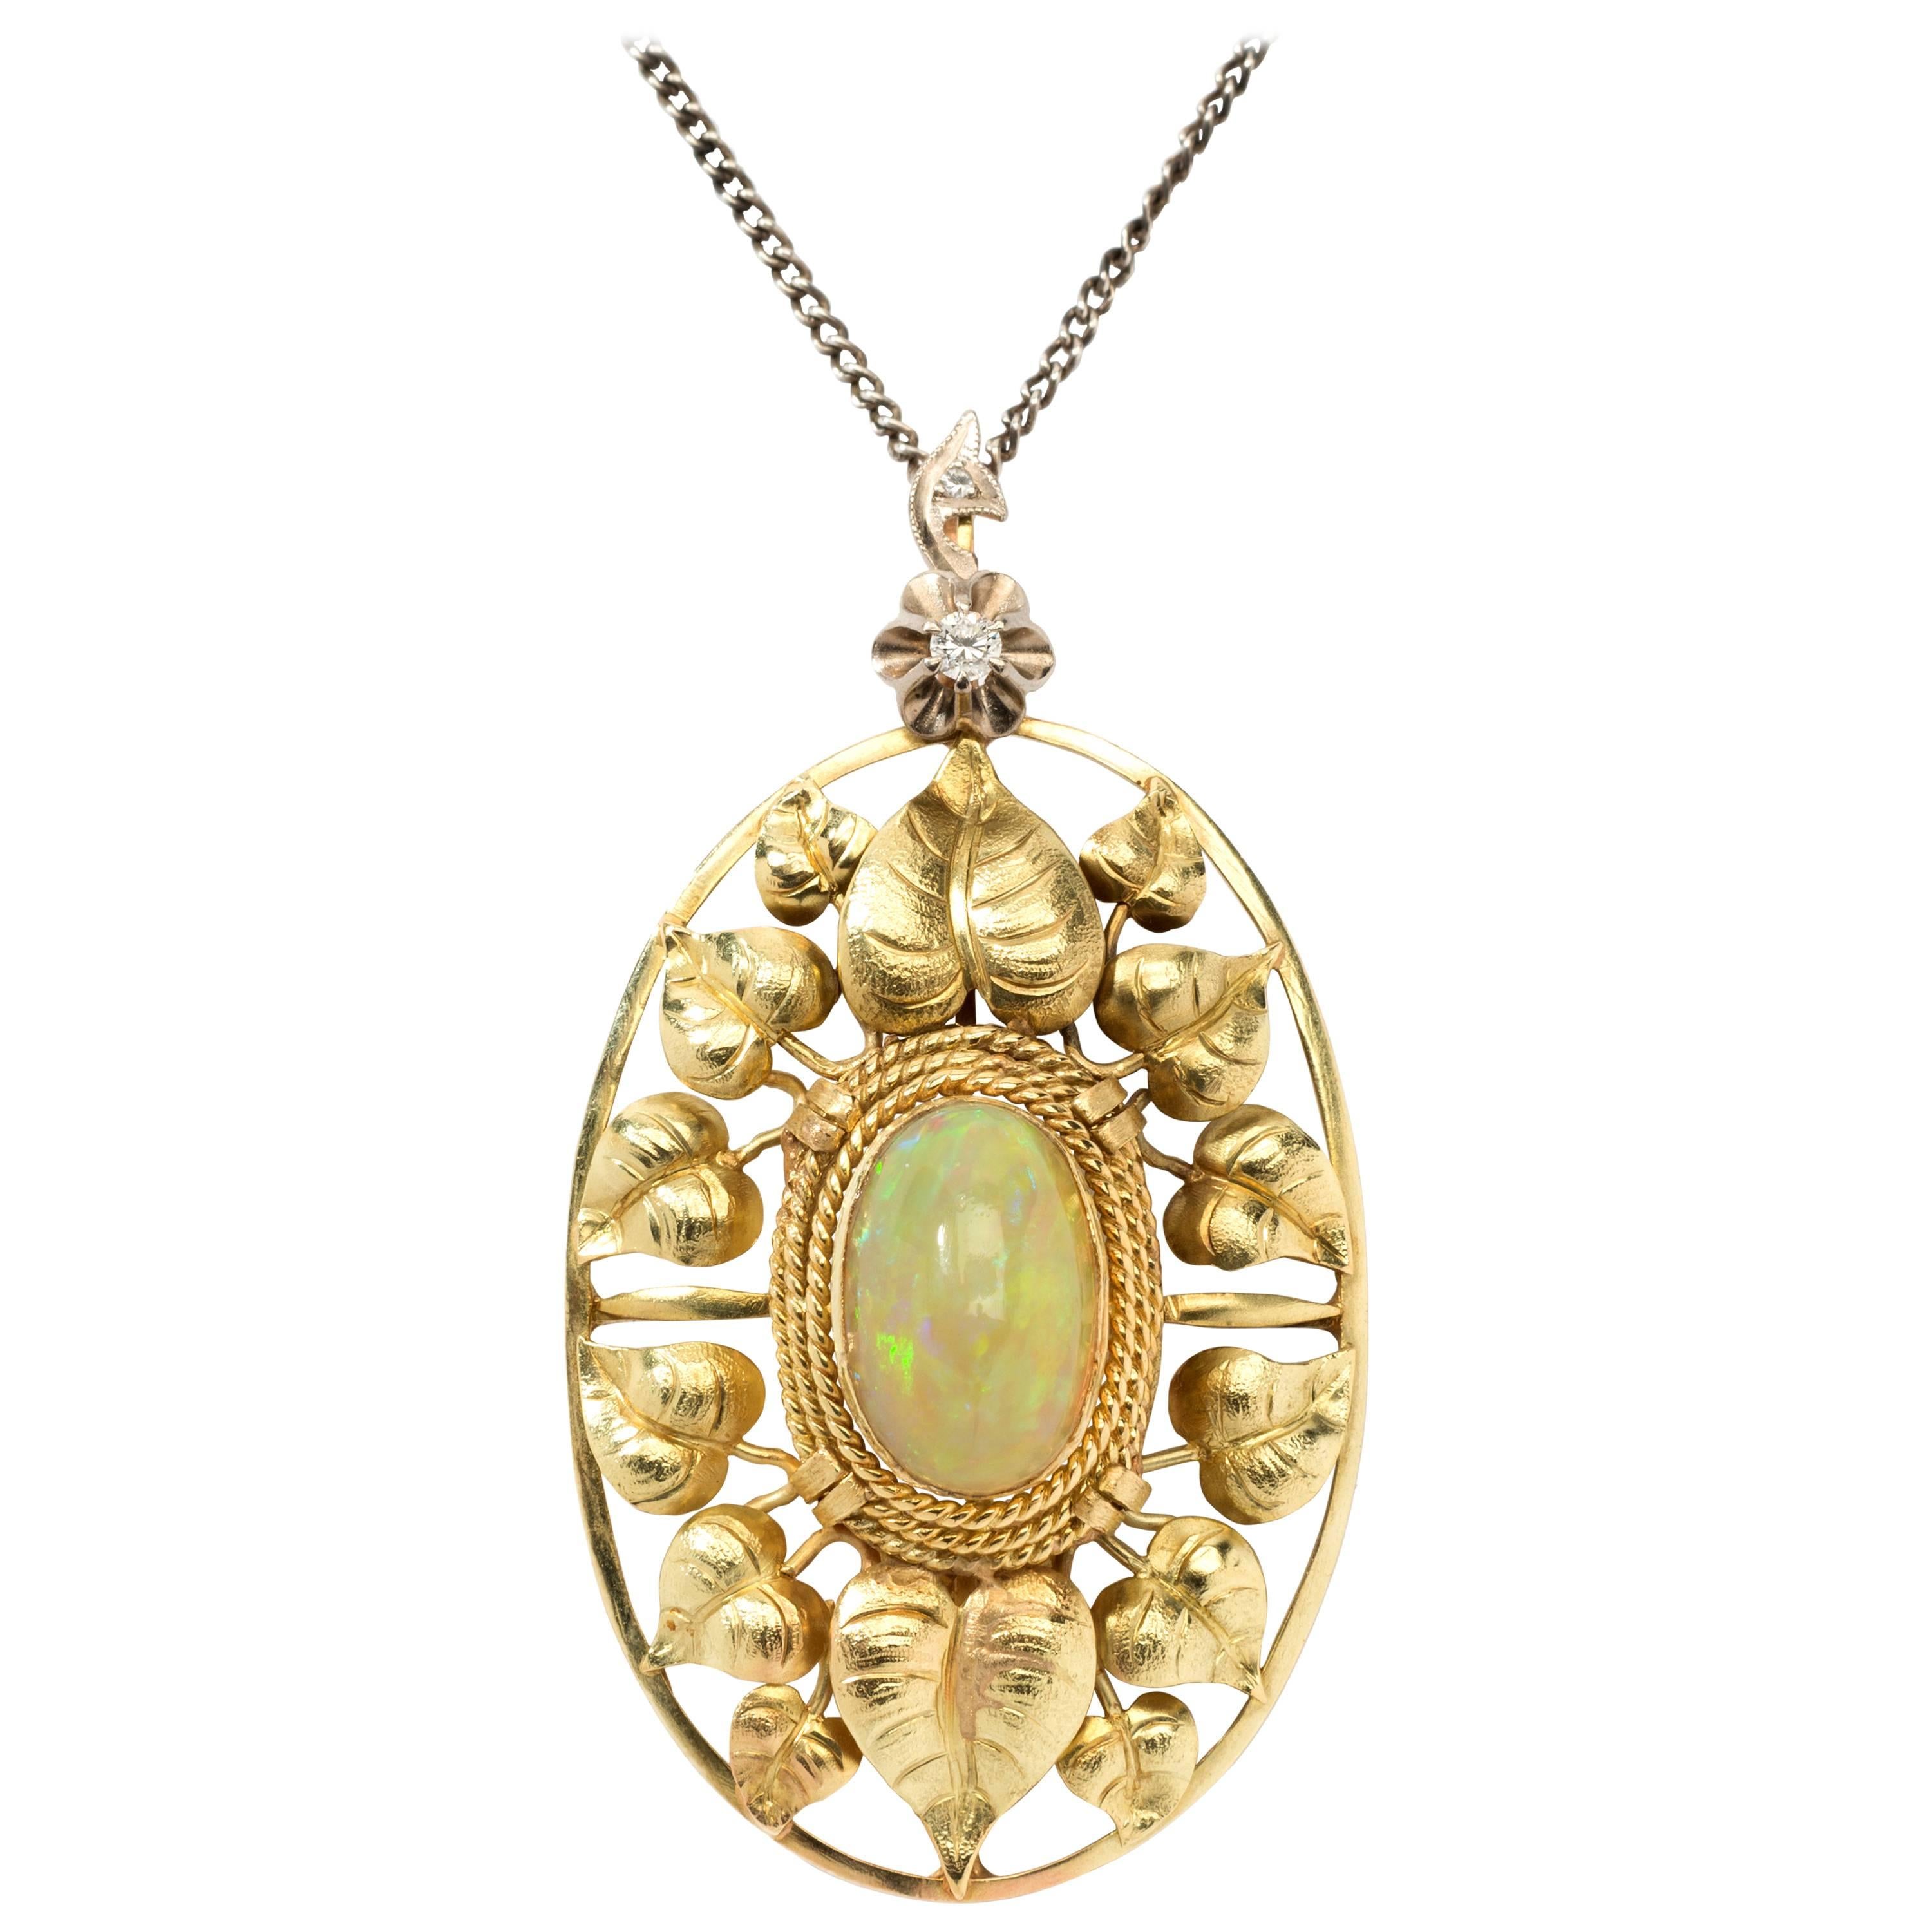 John Zerano Pendentif Art Nouveau en opale avec chaîne en or jaune 14 carats